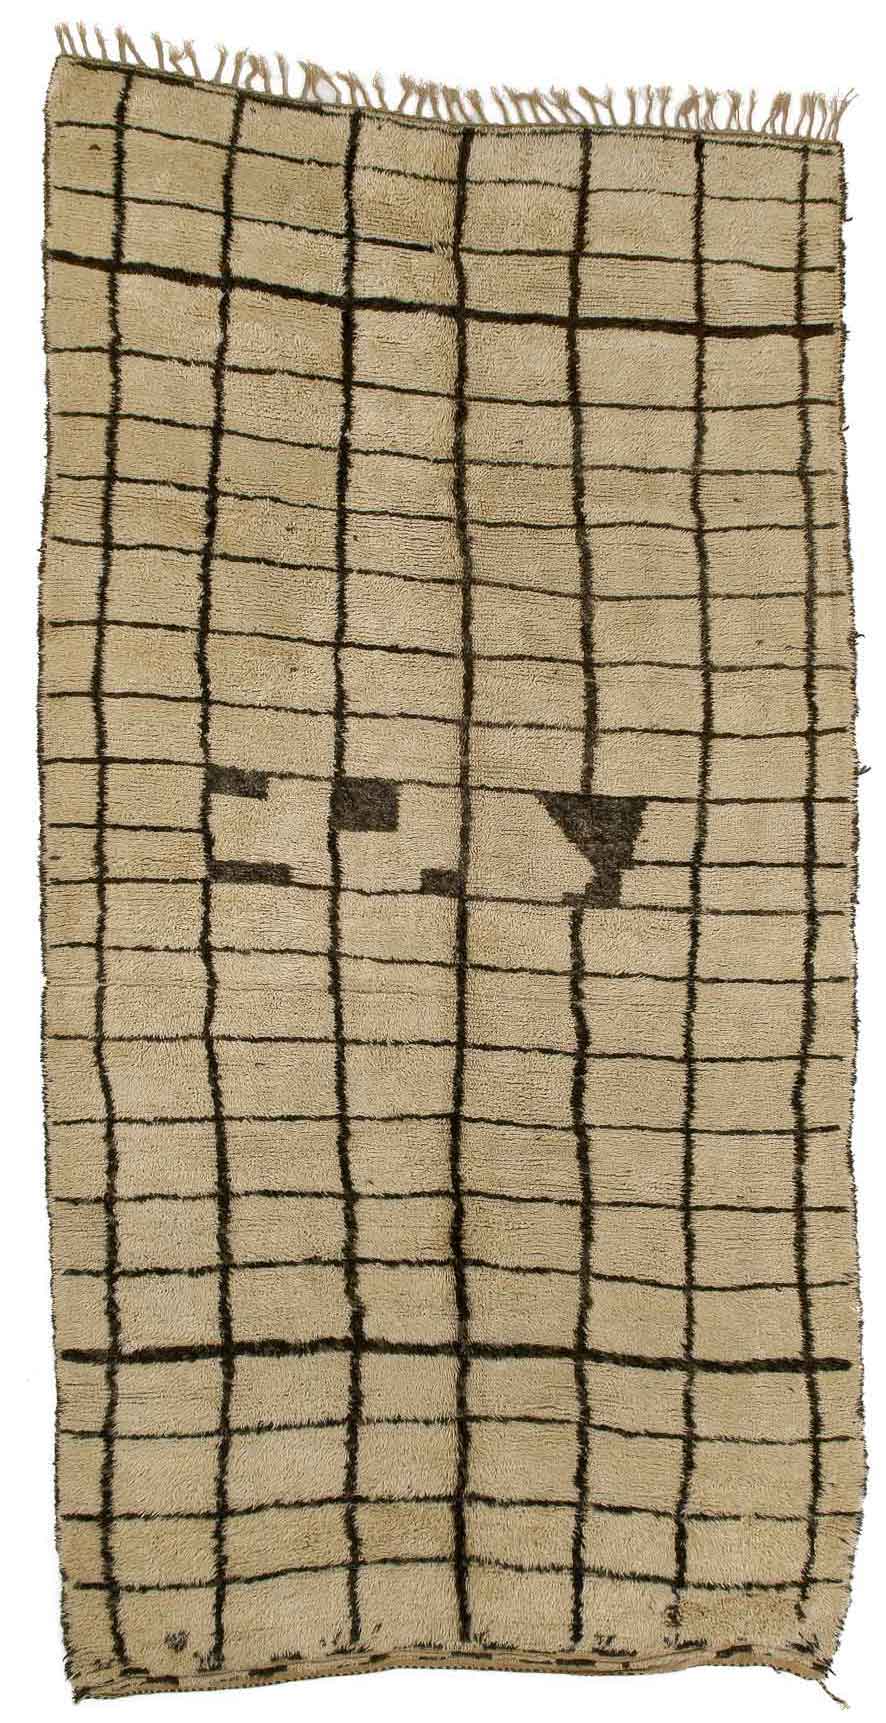 Beni Ouarain rug, north Middle Atlas, Morocco, 20th century. Jürgen Adam Collection at The International Design Museum, Munich